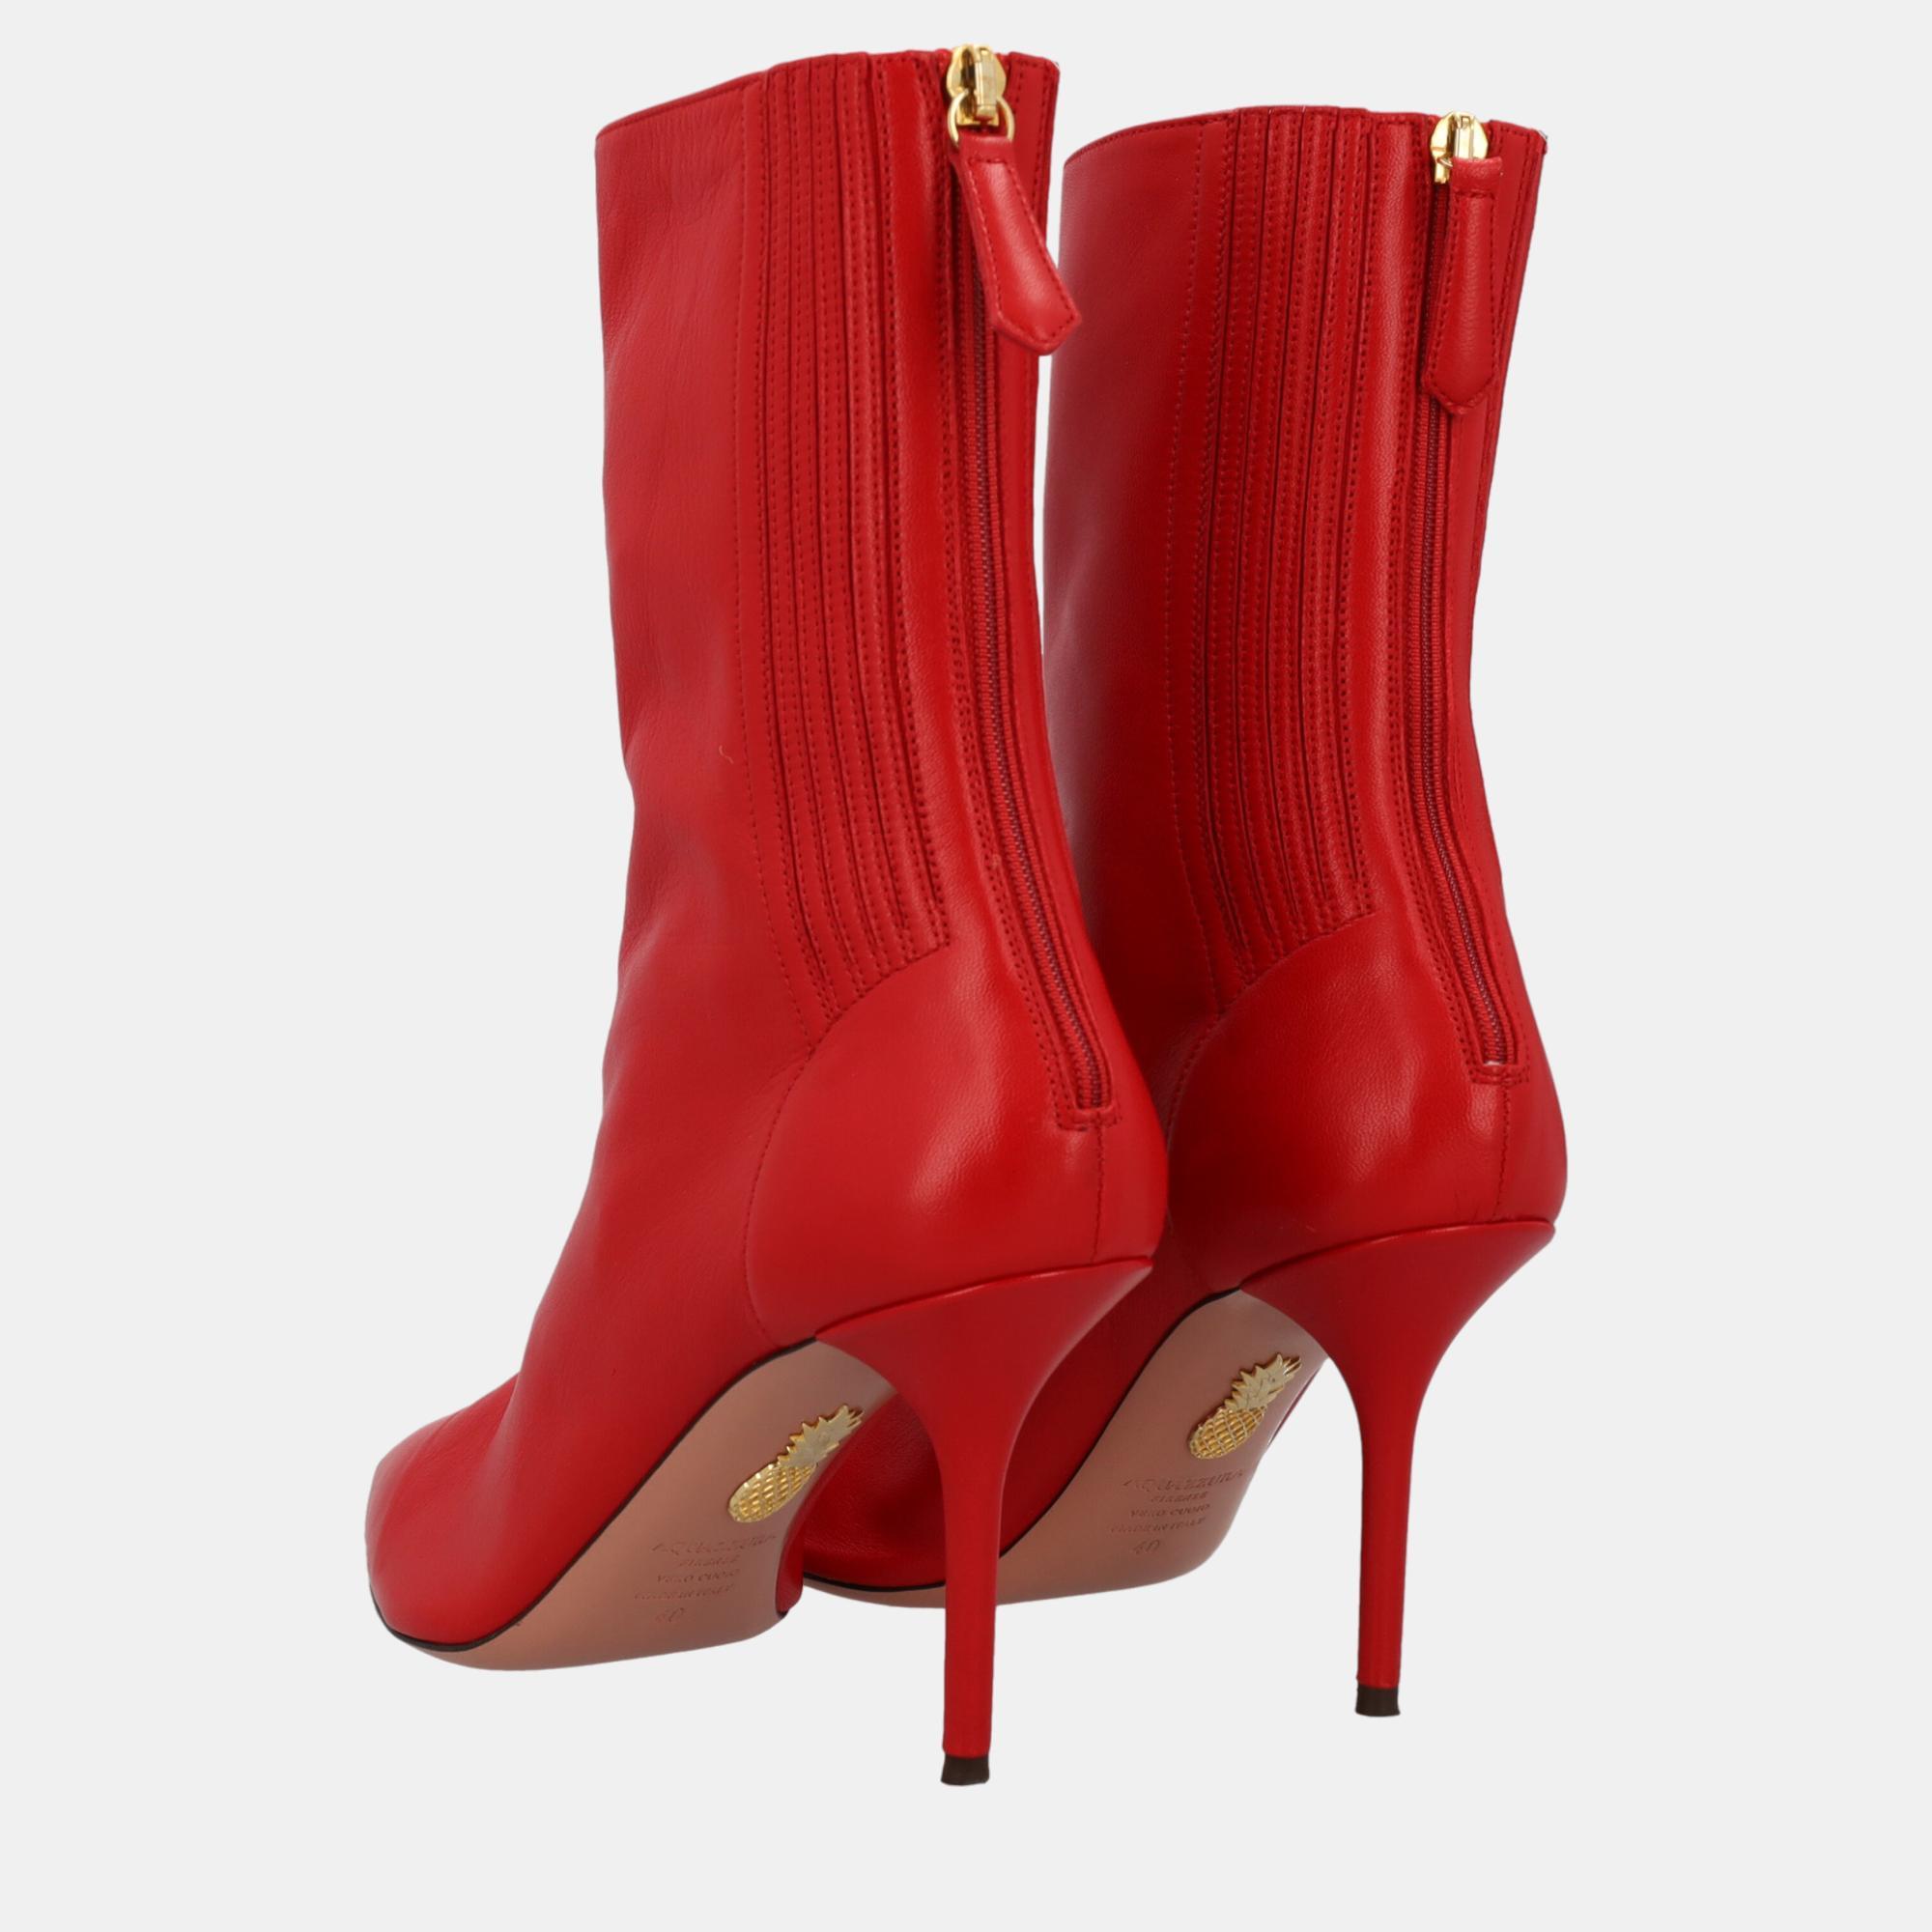 Aquazzura  Women's Leather Ankle Boots - Red - EU 40